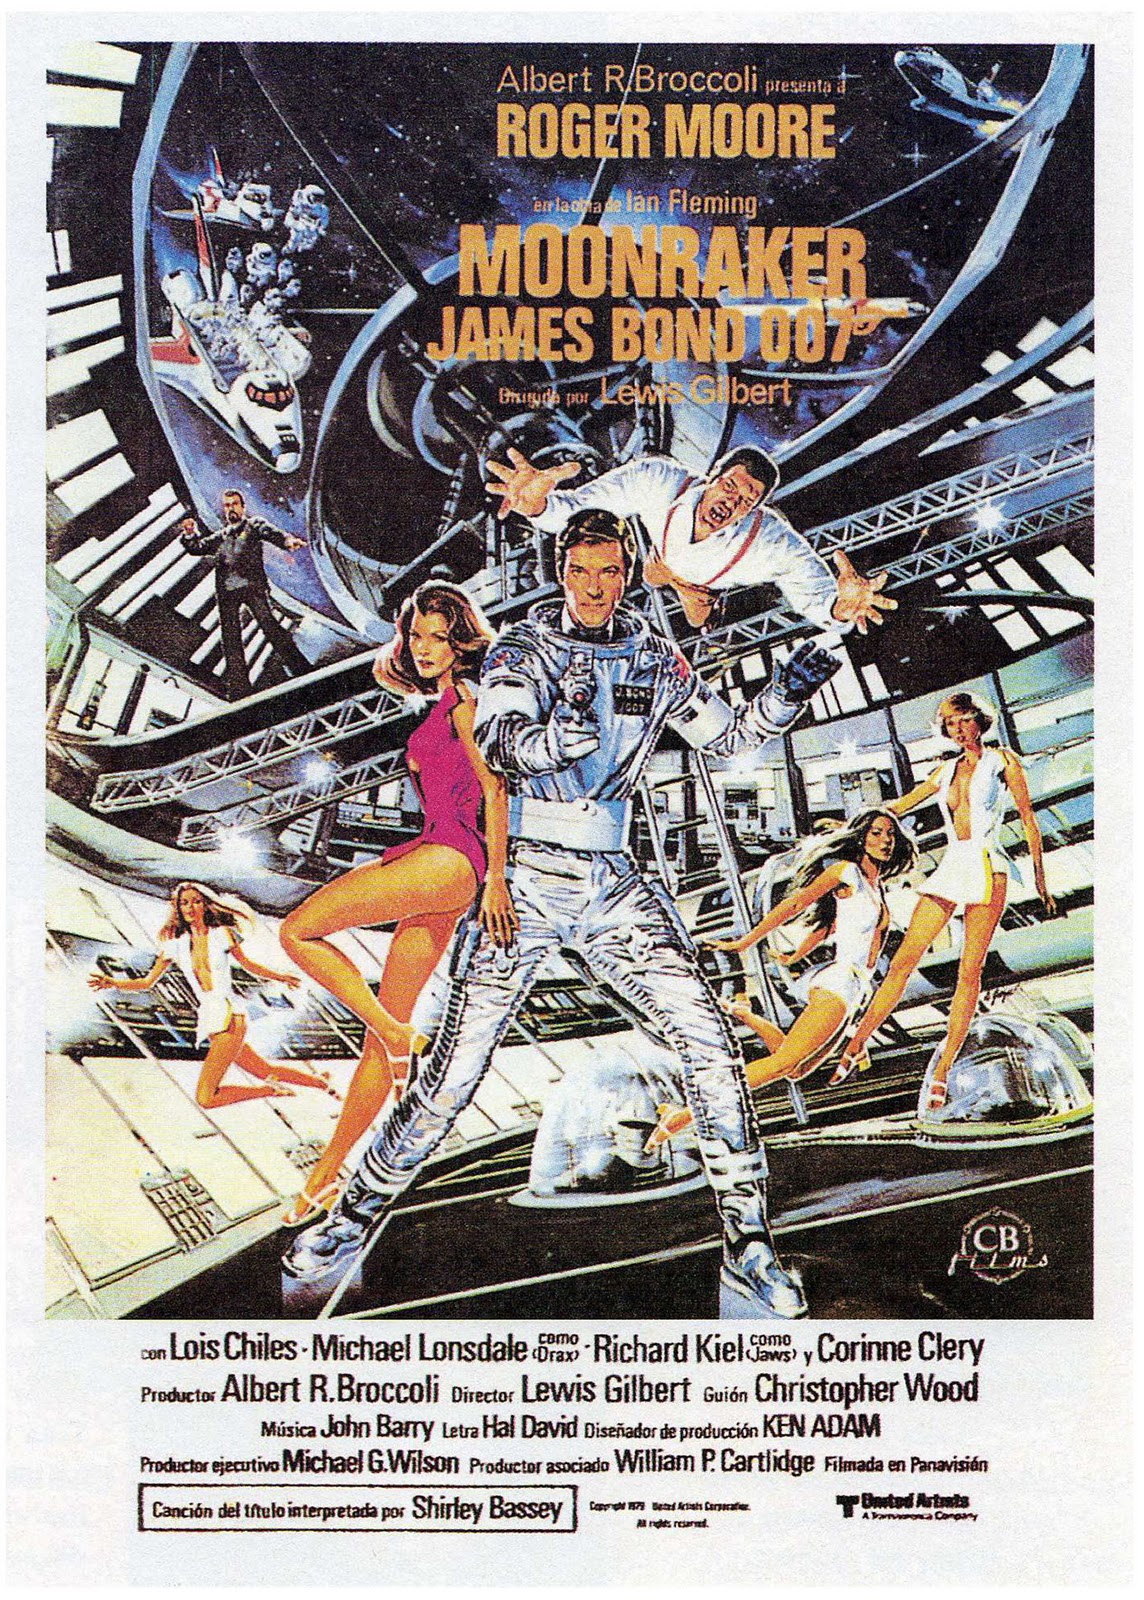 James Bond (007) Moonraker (1979)